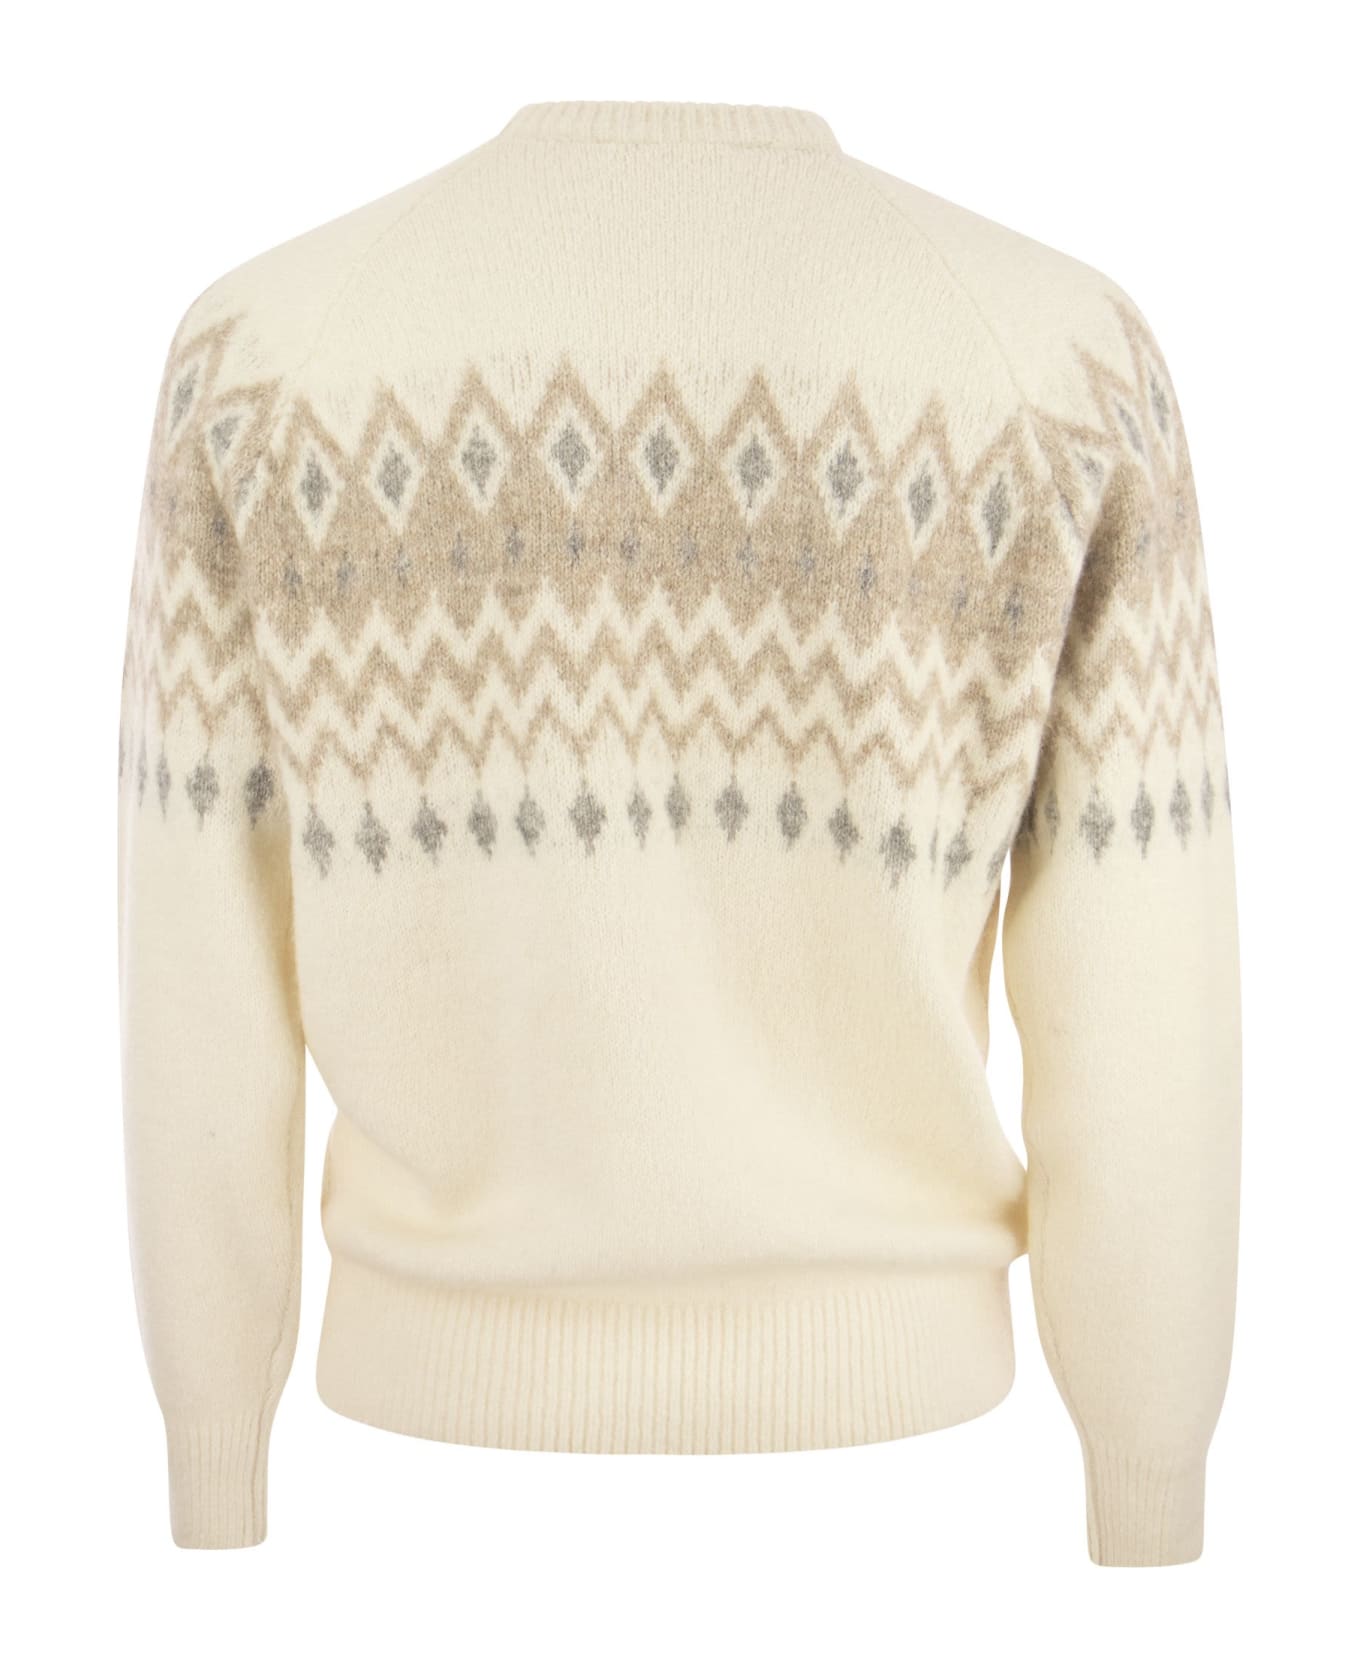 Brunello Cucinelli Icelandic Jacquard Buttoned Sweater - Panama/grey/sand